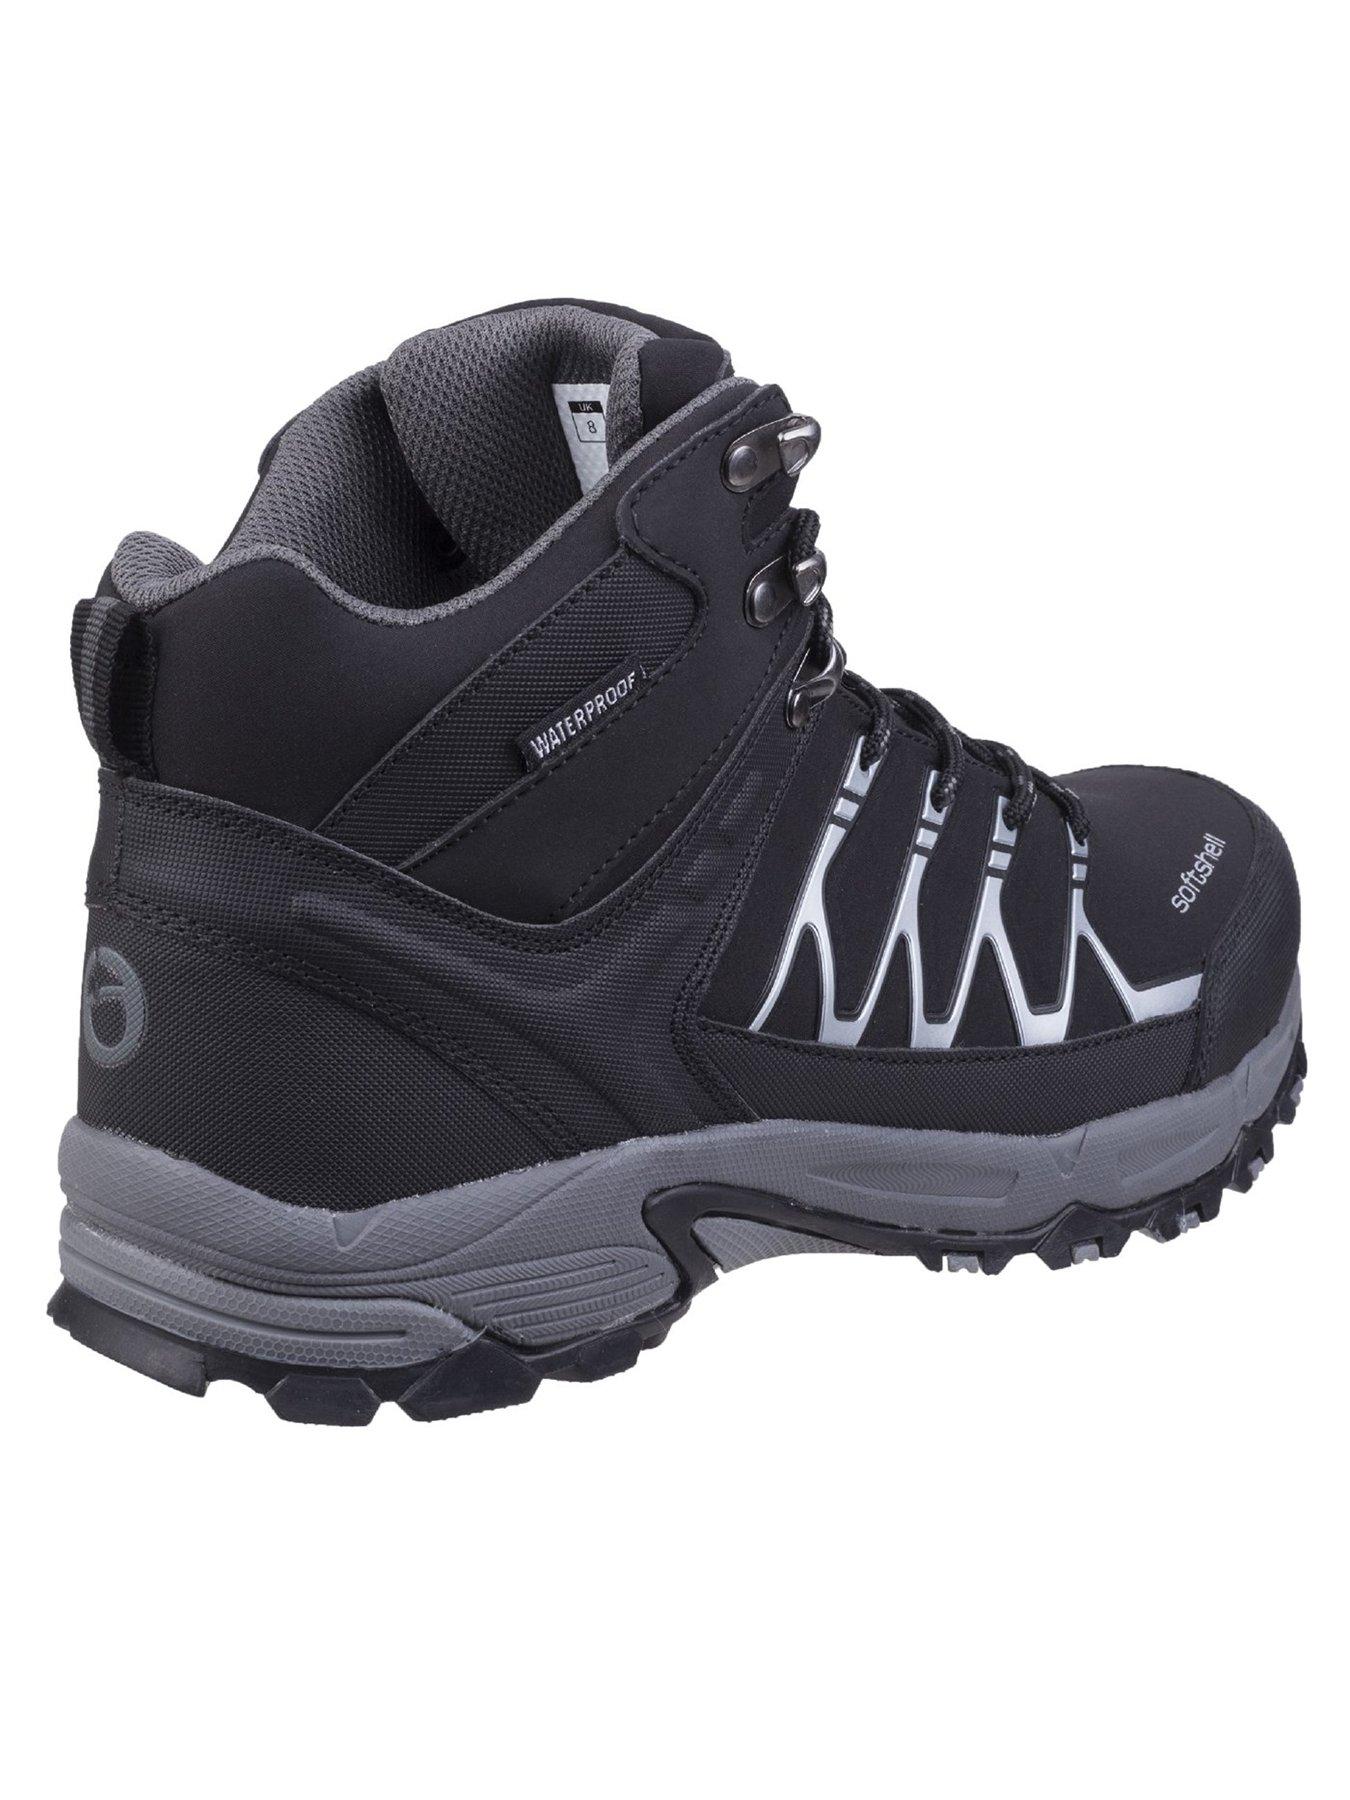 Cotswold Abbeydale Mid Walking Boots - Black | very.co.uk